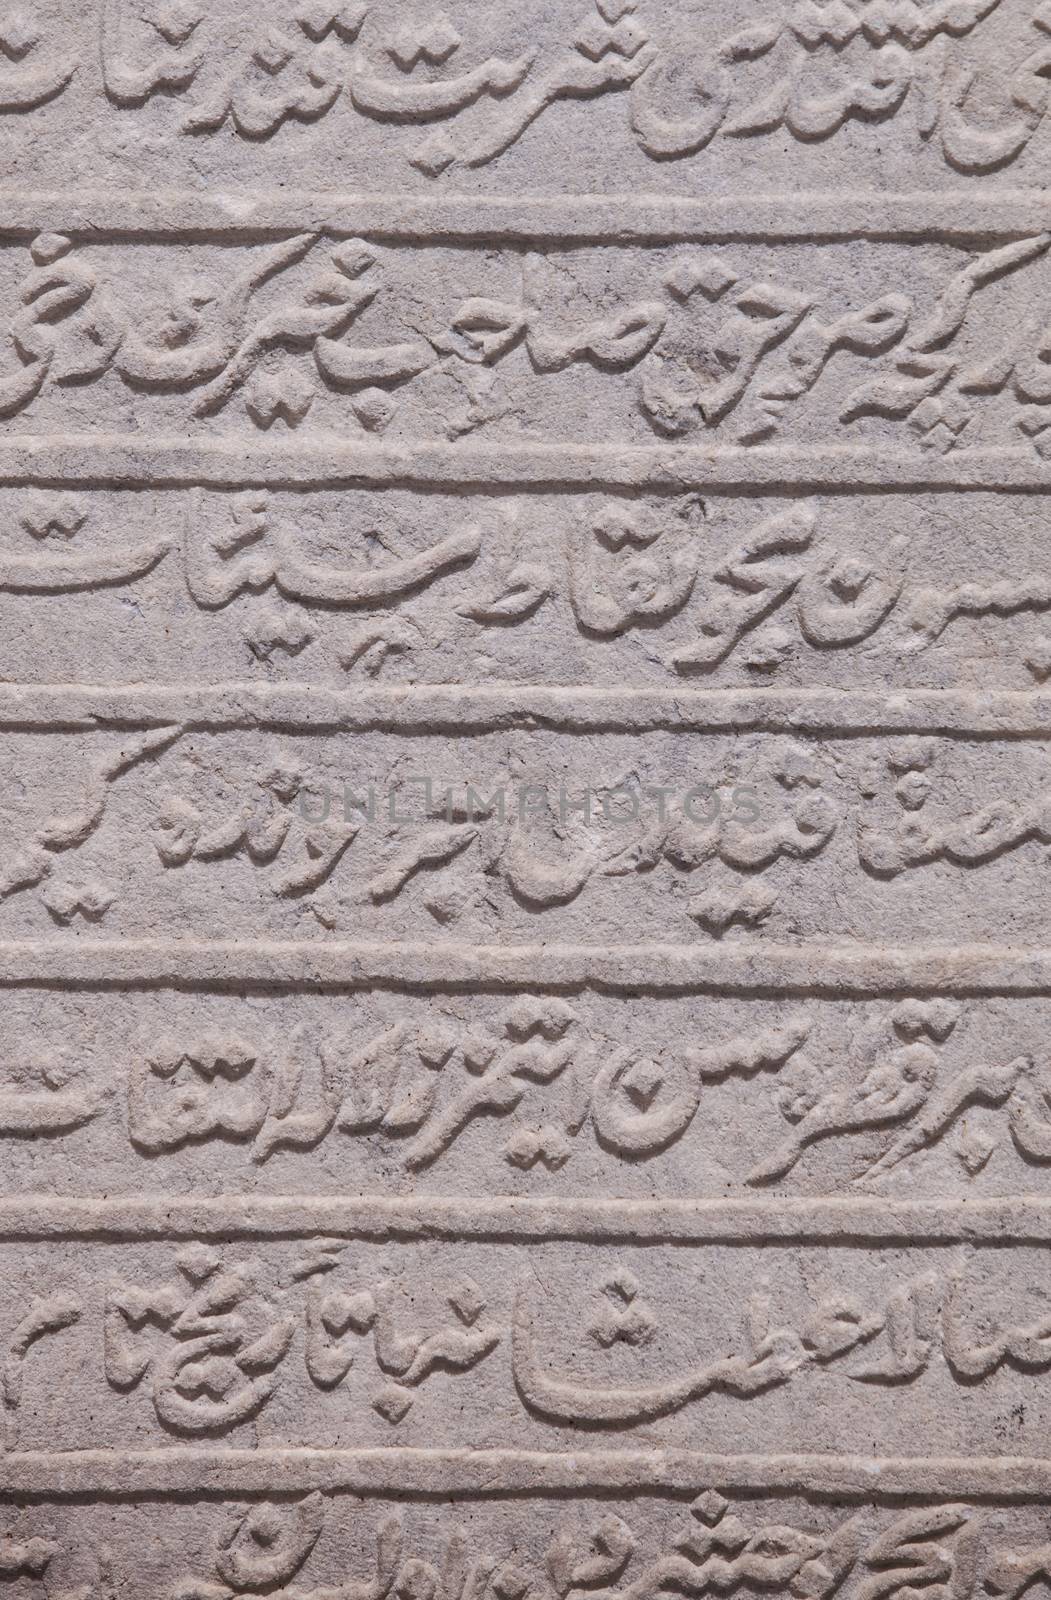 Stone Inscription with Arabic script from Perga Ruins in Turkey